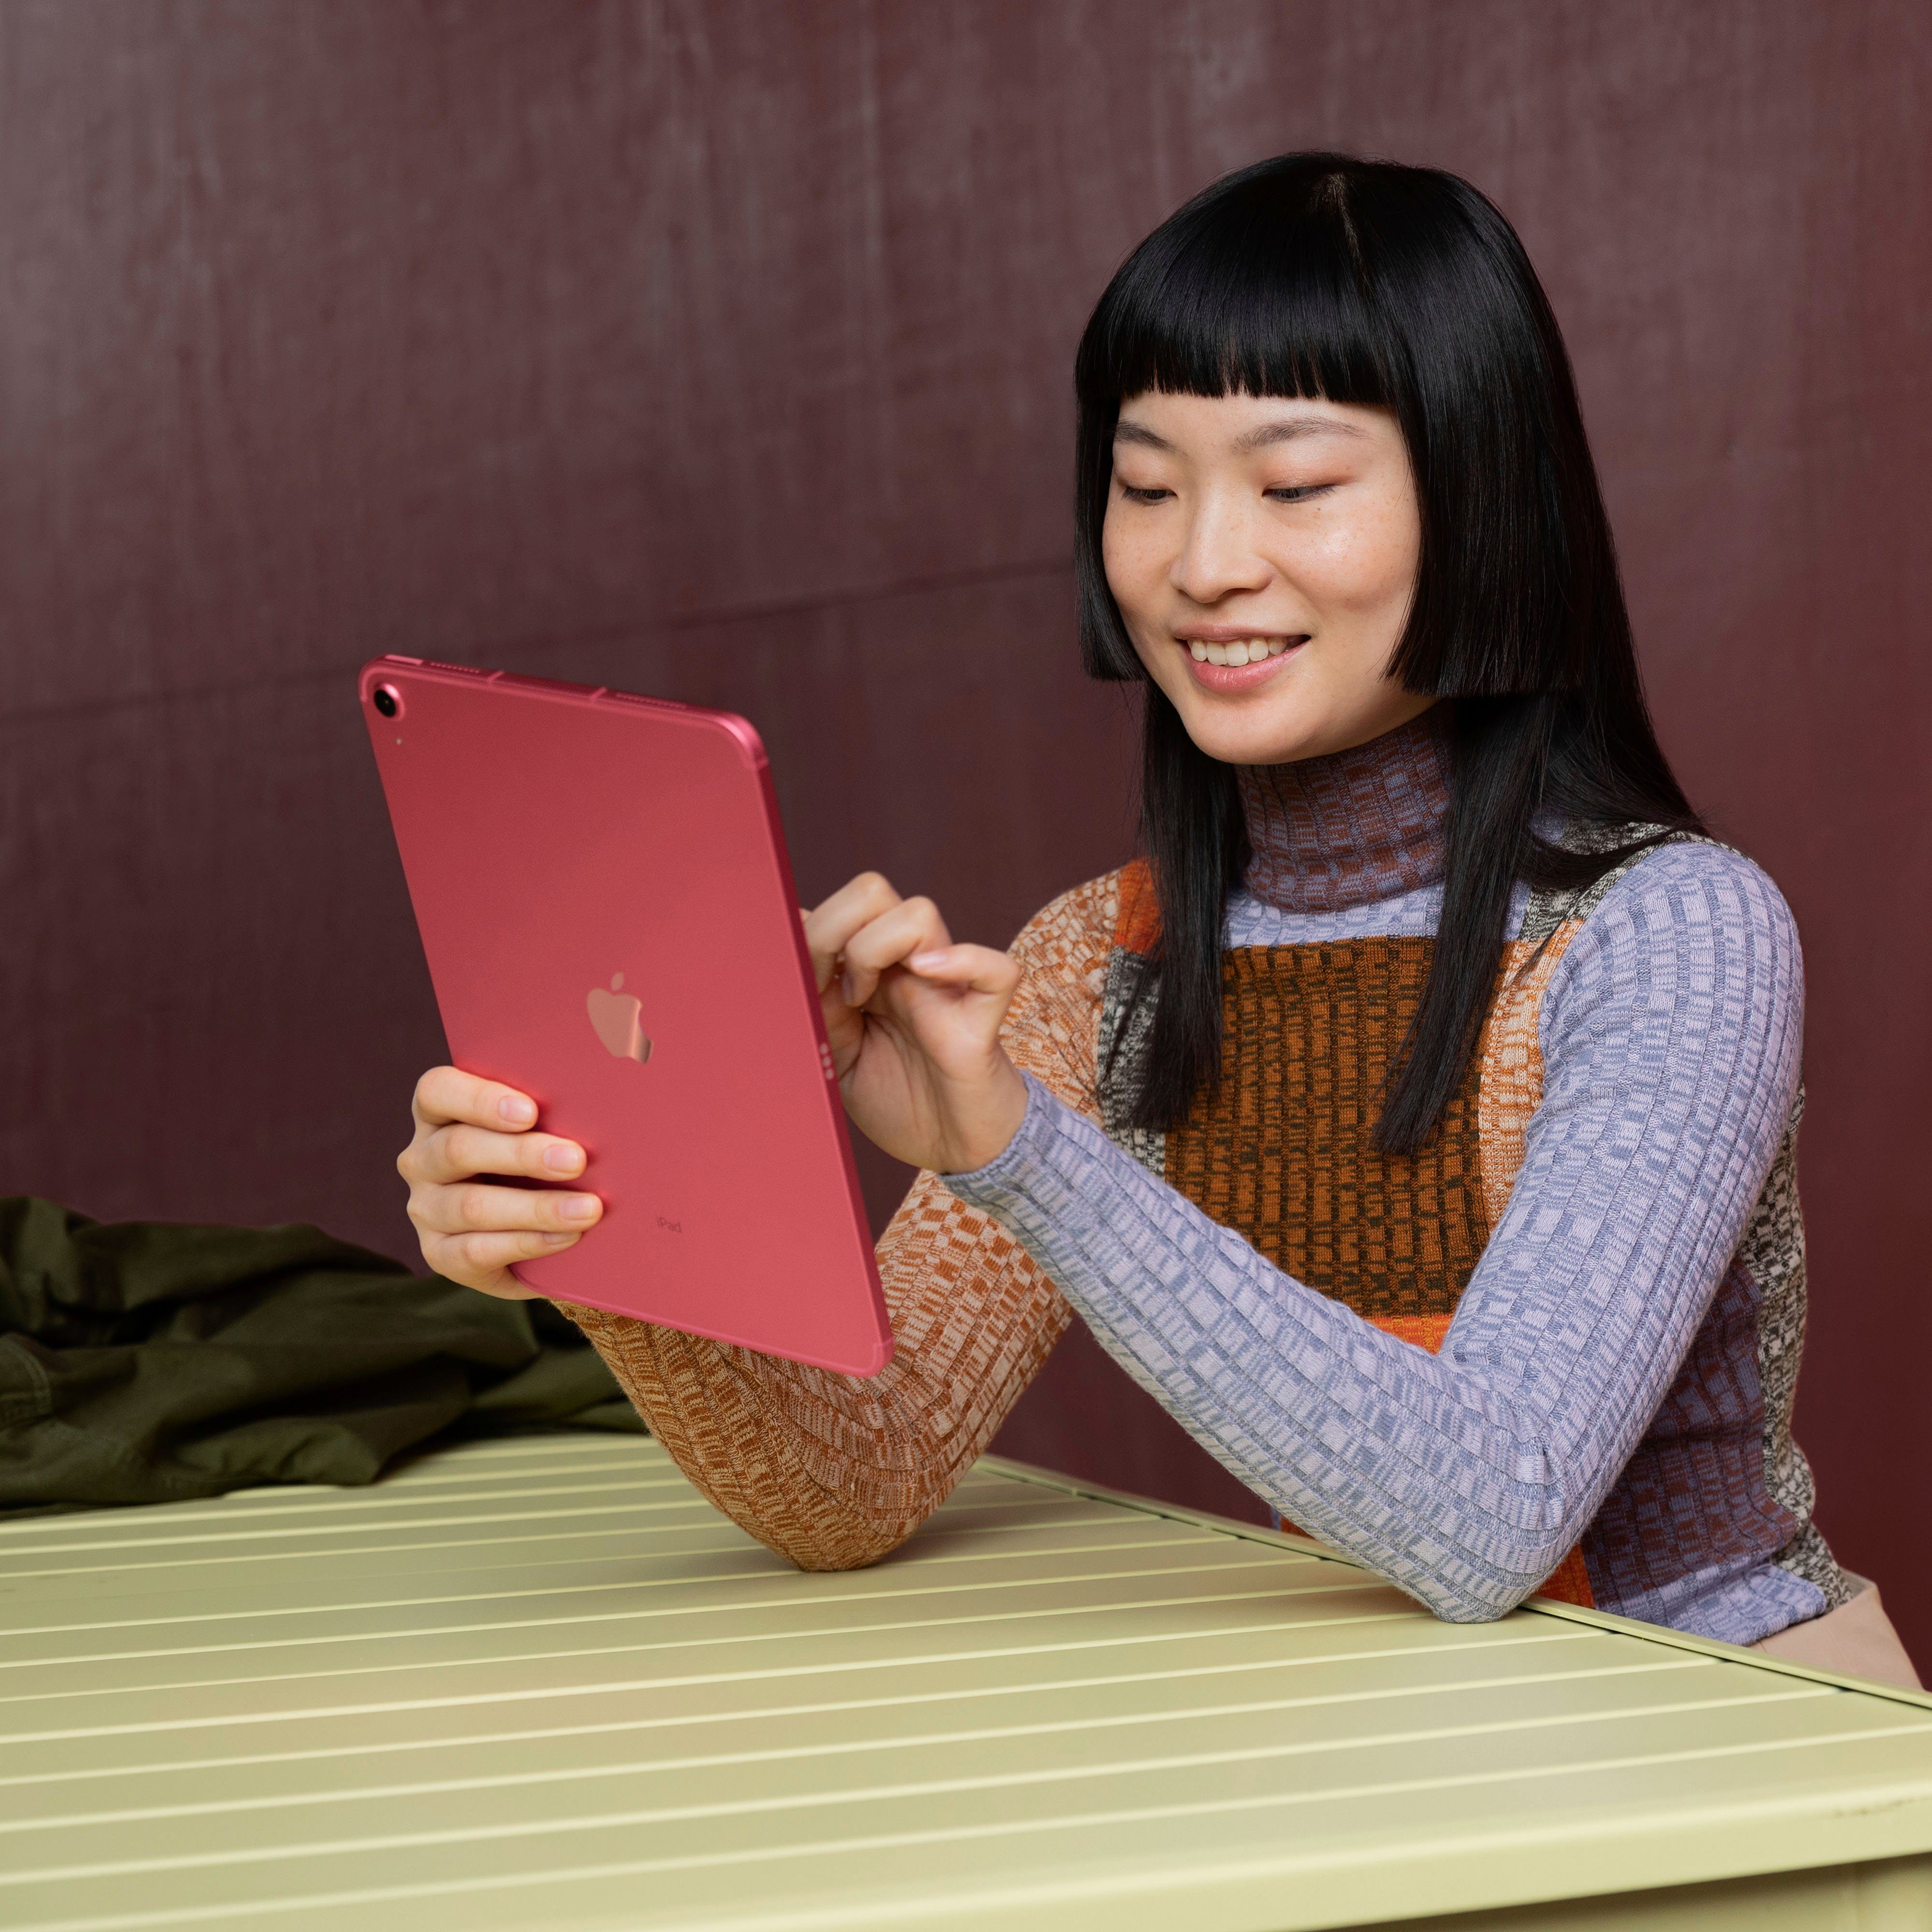 2022 GB, Generation) Tablet Wi-Fi (10,9", iPadOS) blue iPad Apple 64 (10